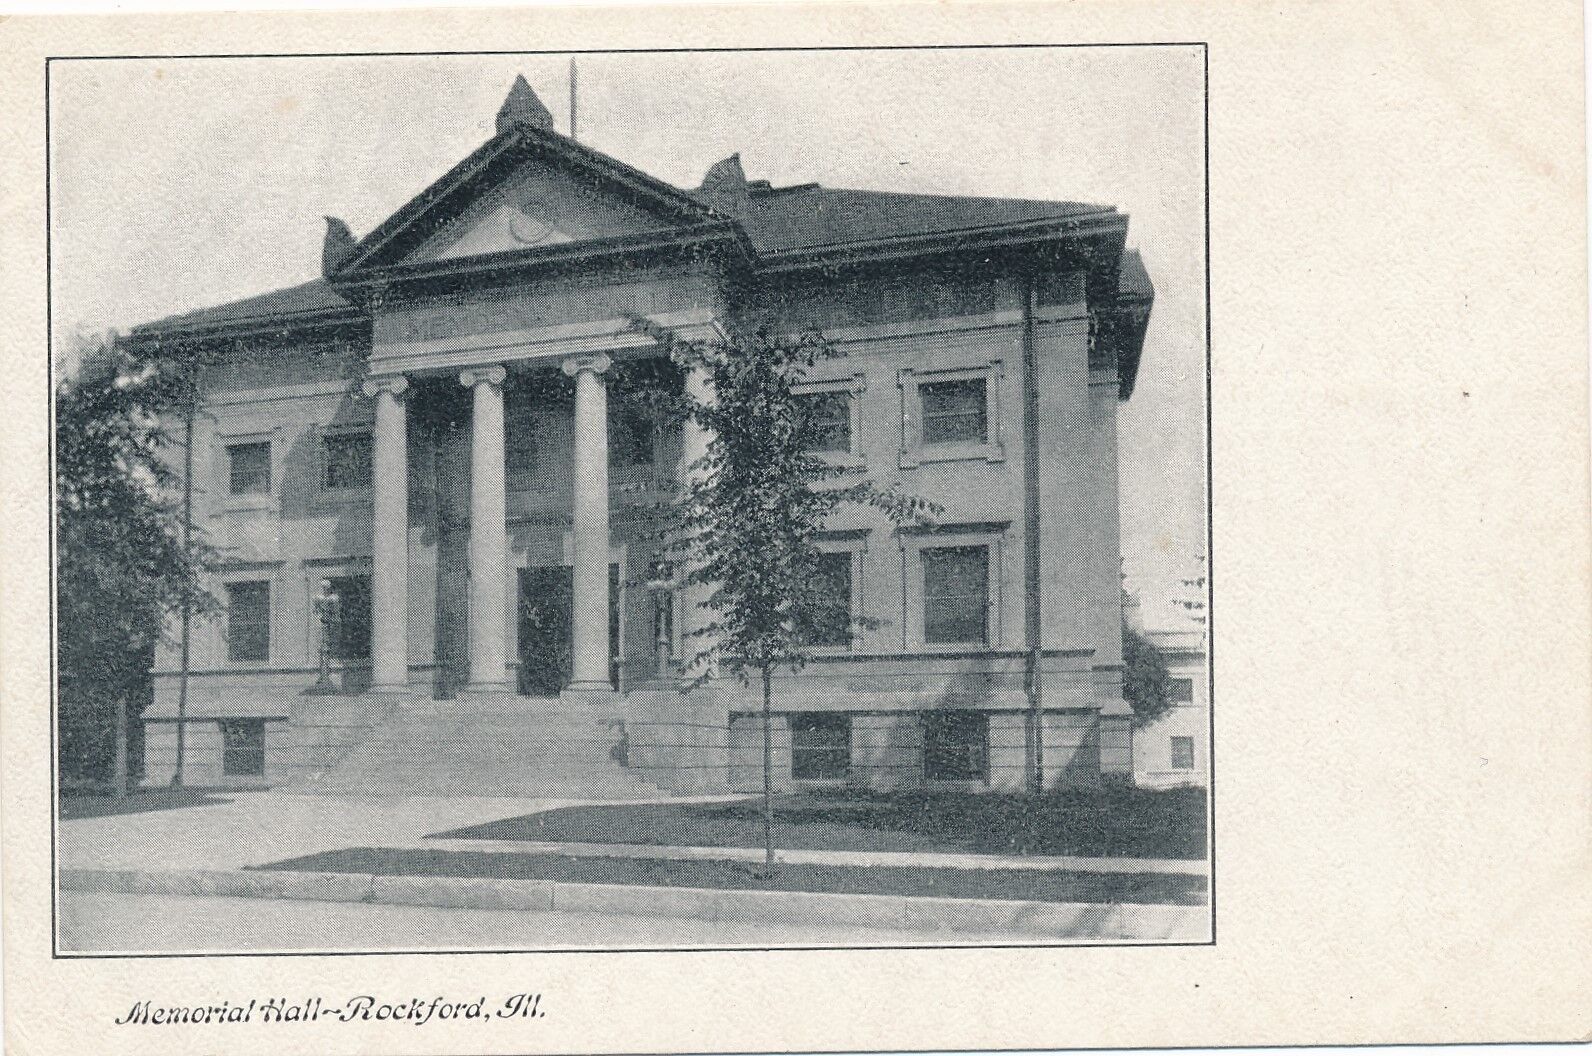 ROCKFORD IL – Memorial Hall